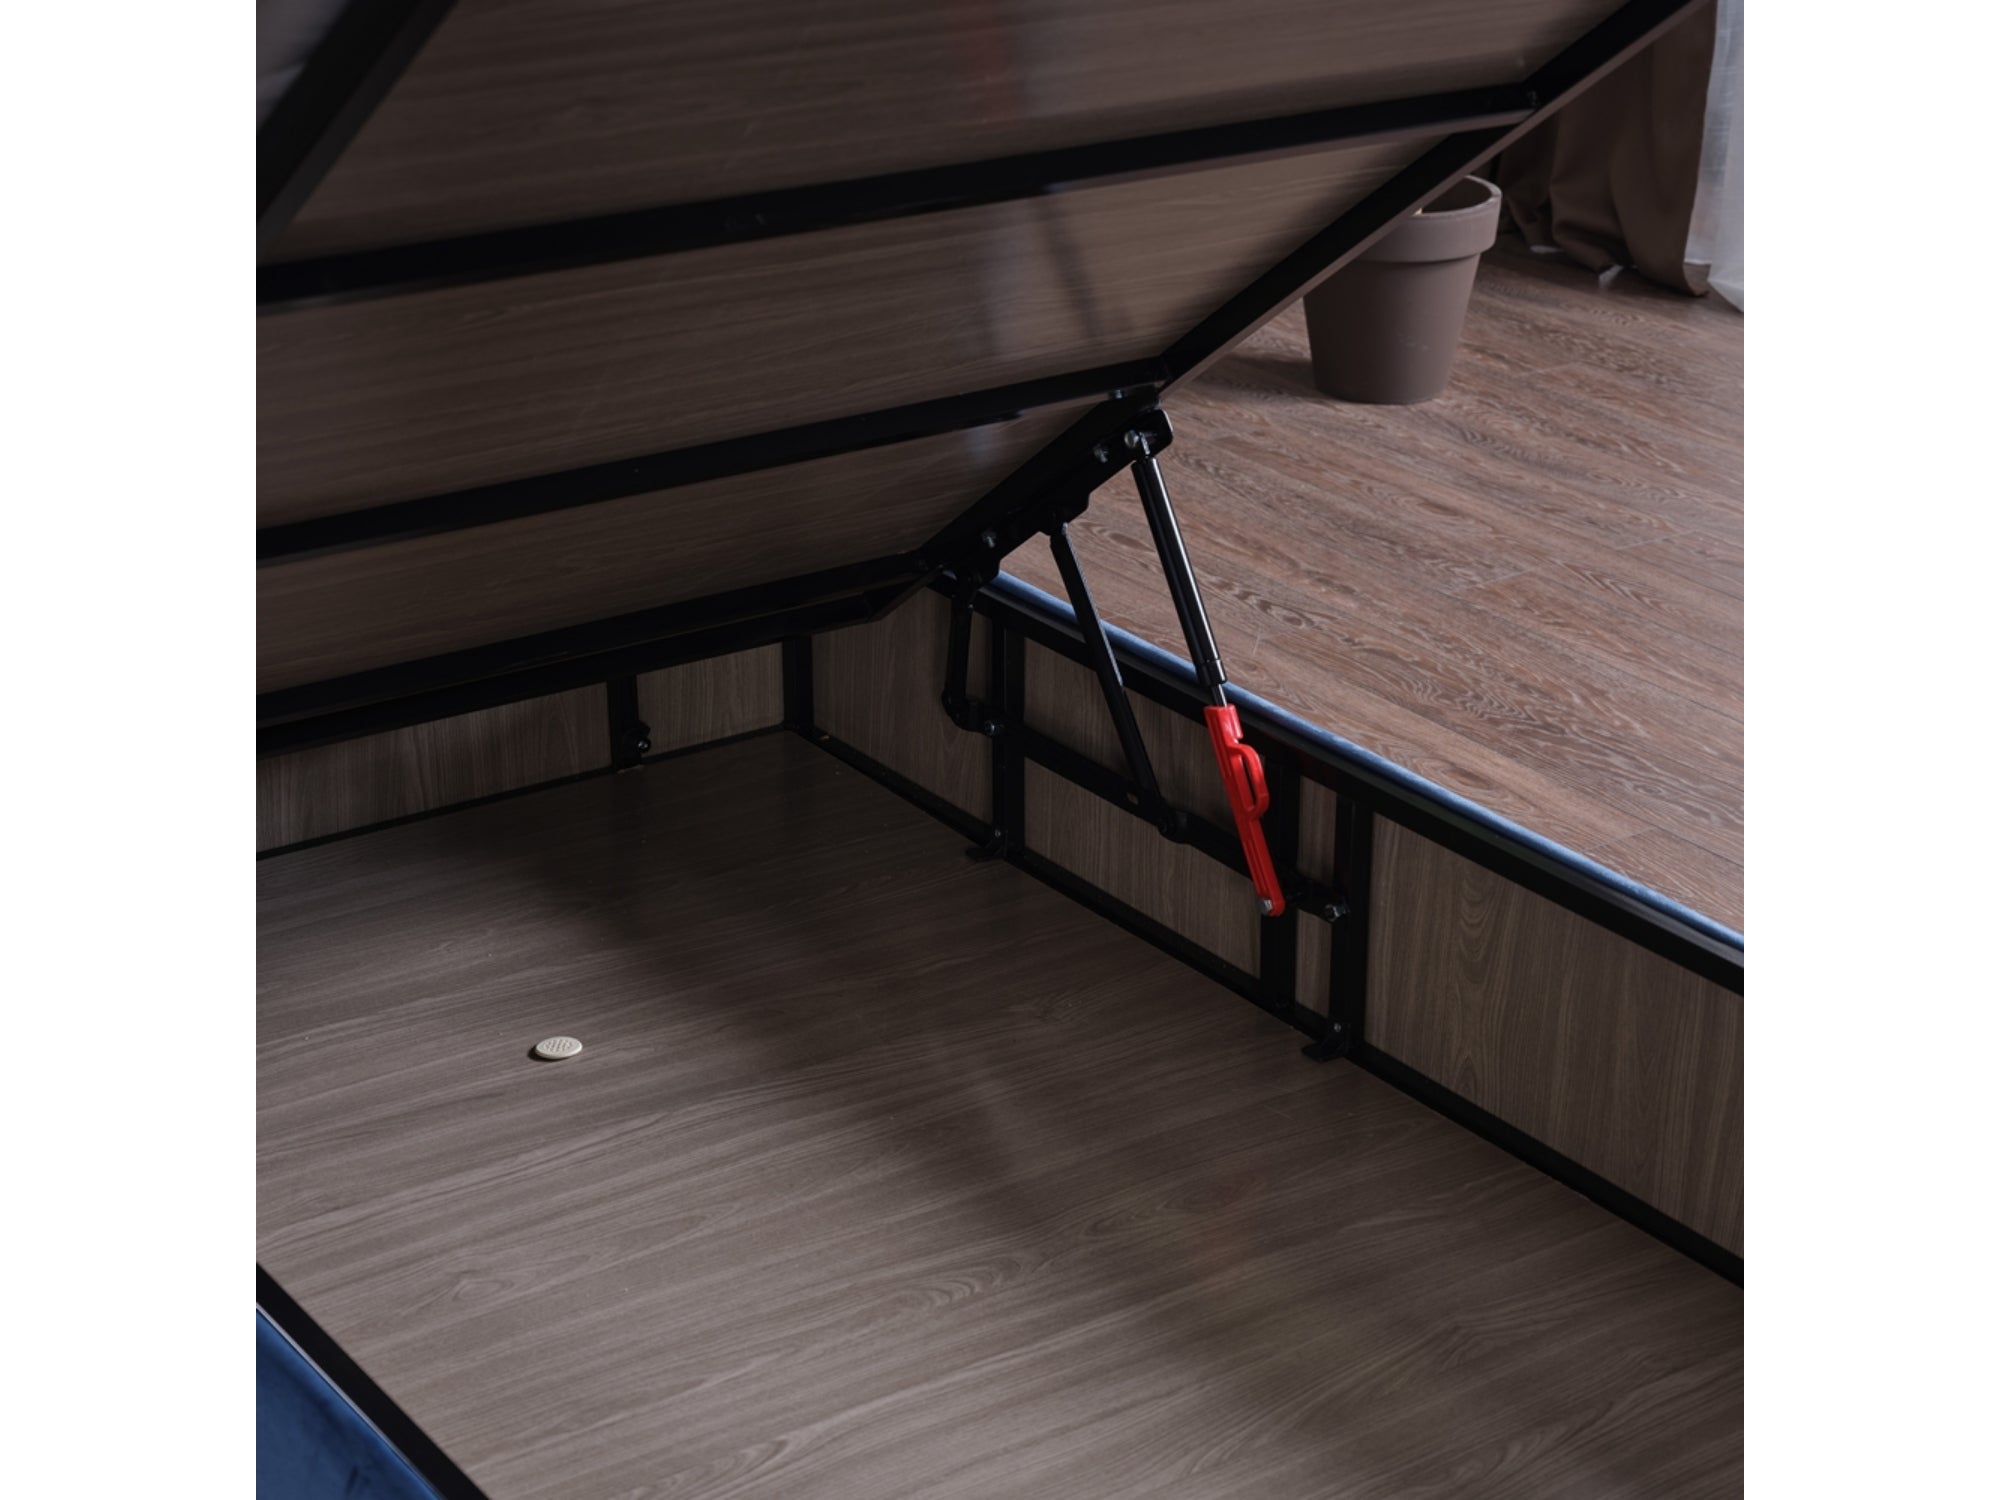 Cordoba Storage Bed With Headboard Light Blue